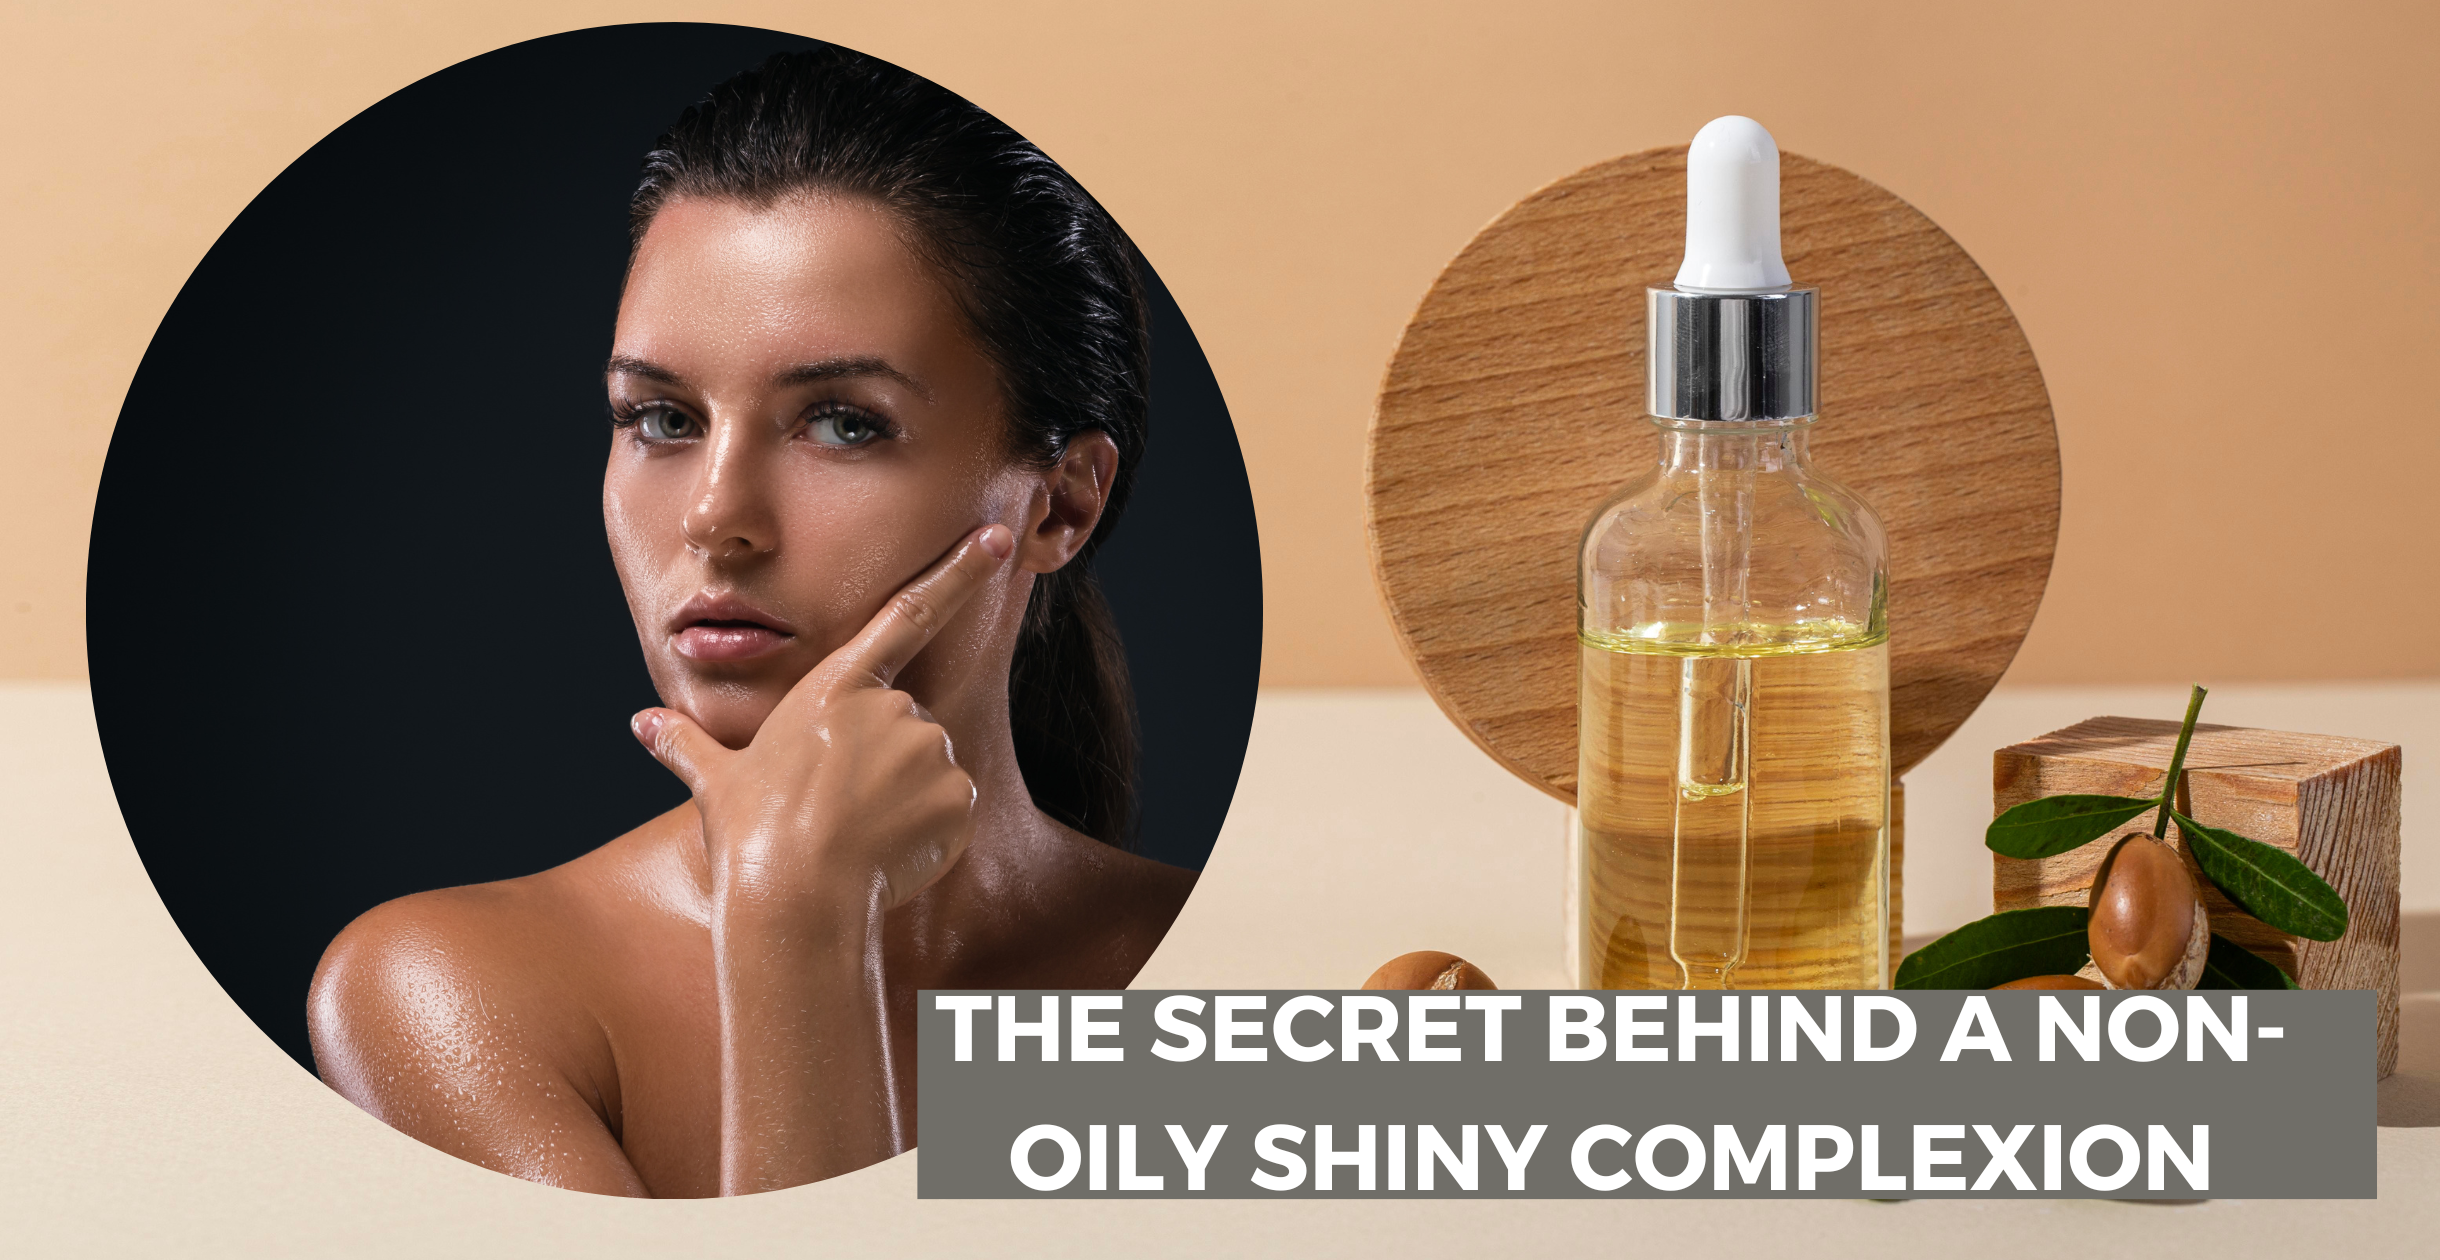 The Secret Behind a Non-Oily Shiny Complexion